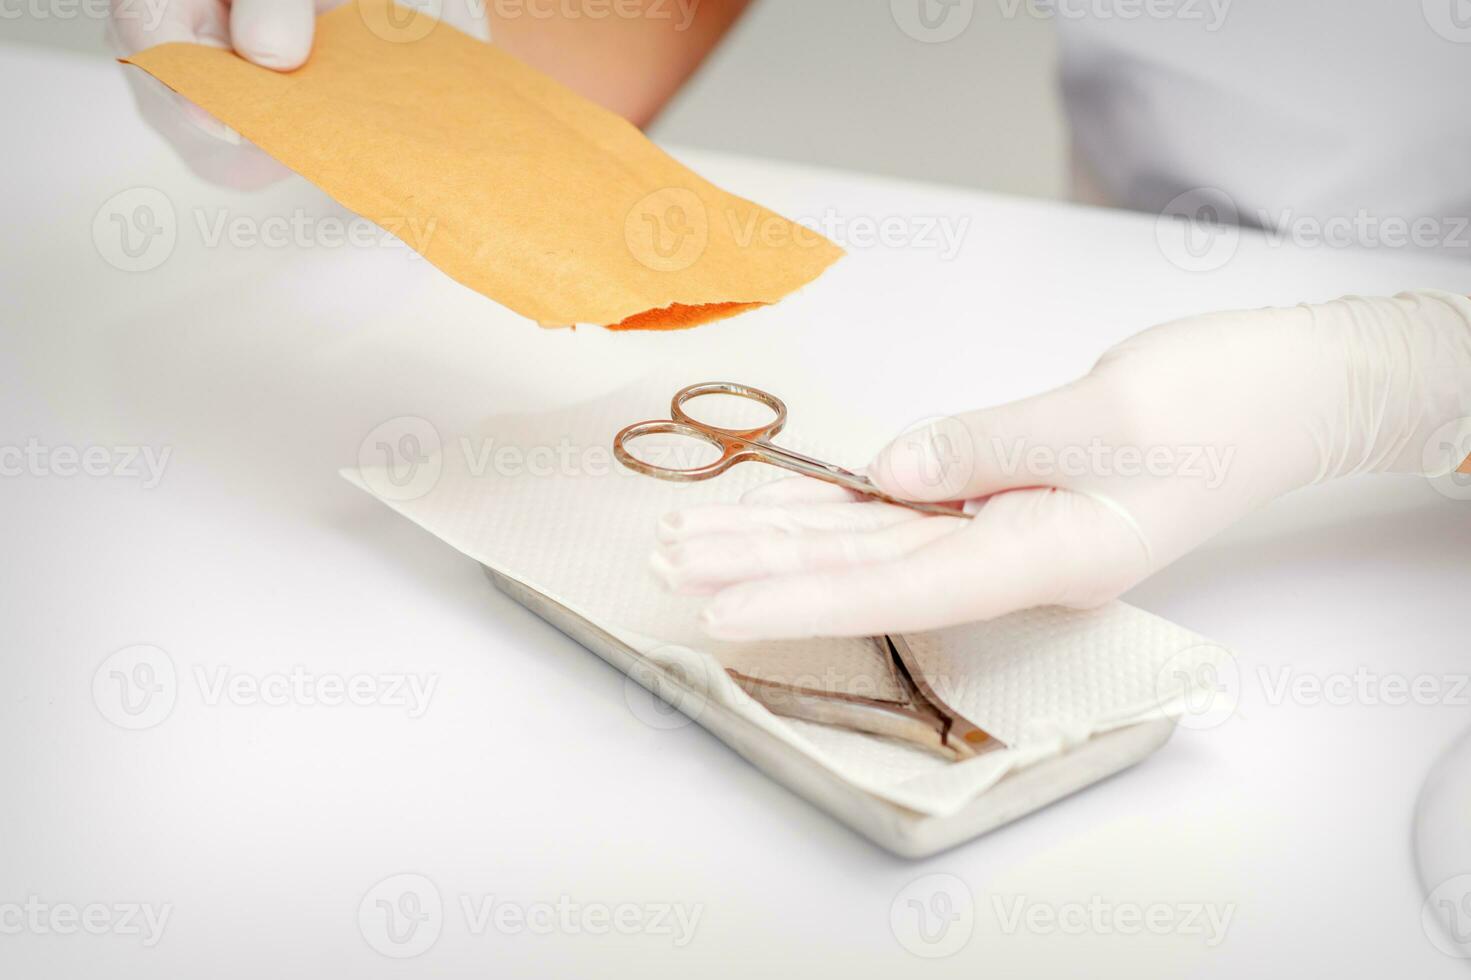 Master of manicure sterilizing manicure scissors. Disinfection of manicure tools. photo